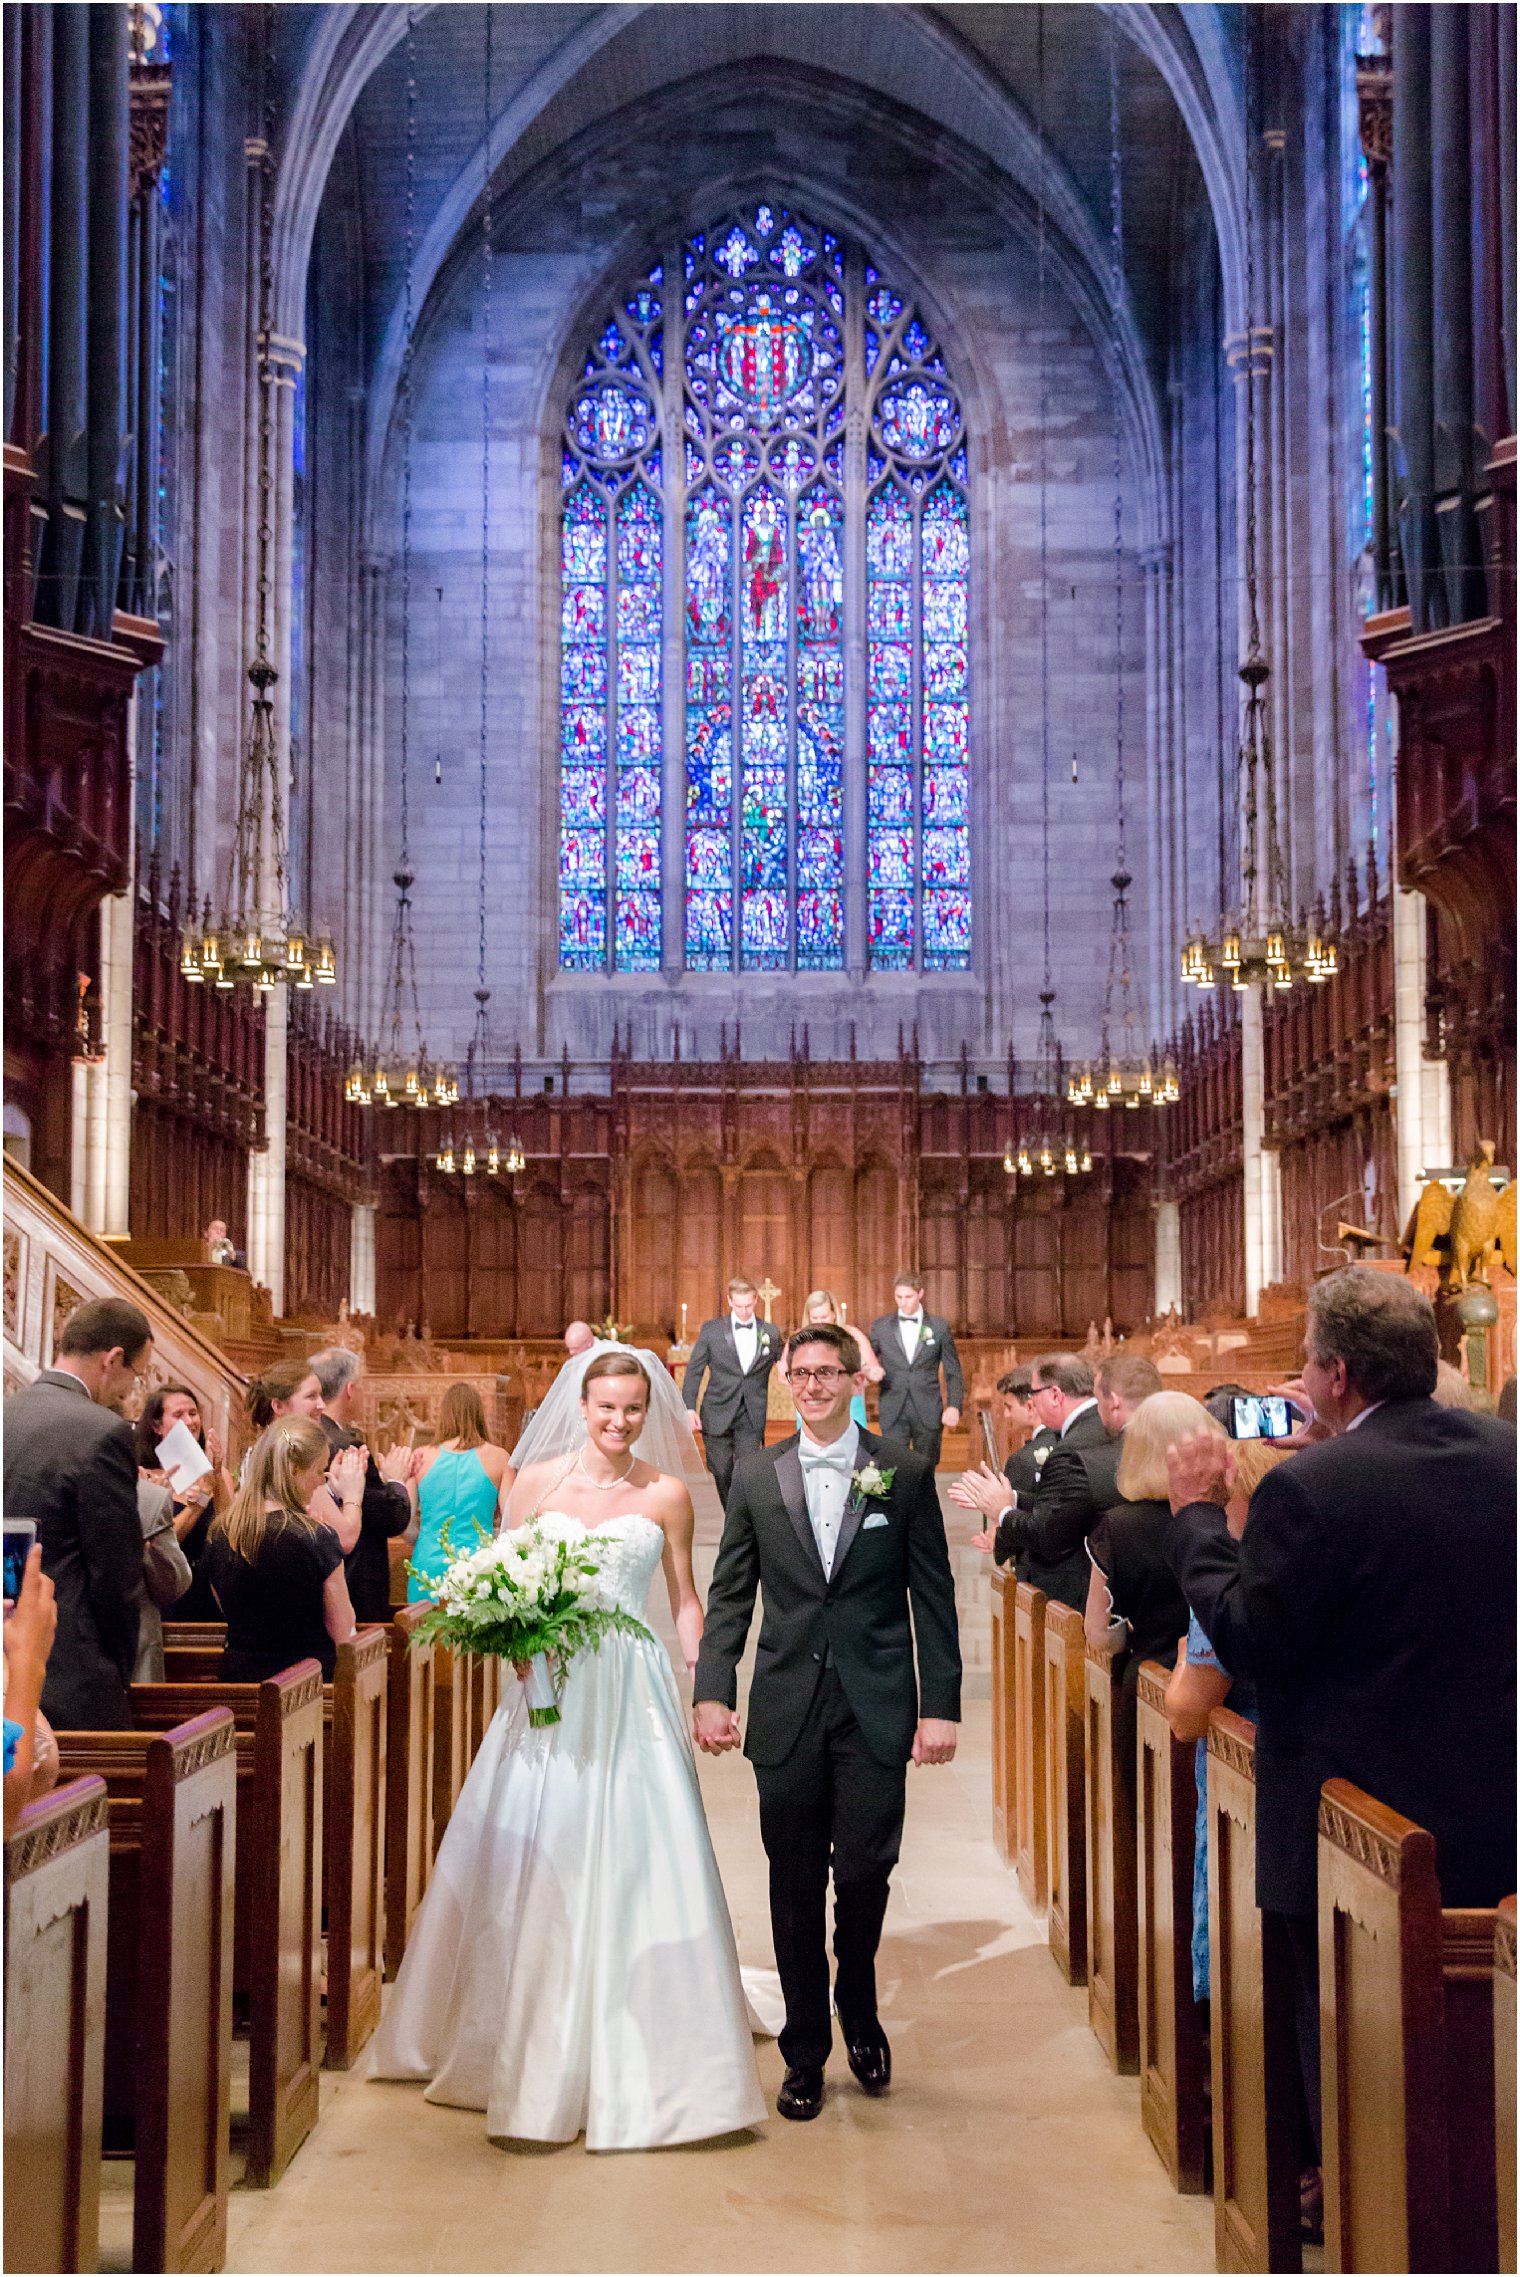 Princeton Chapel wedding at Princeton University